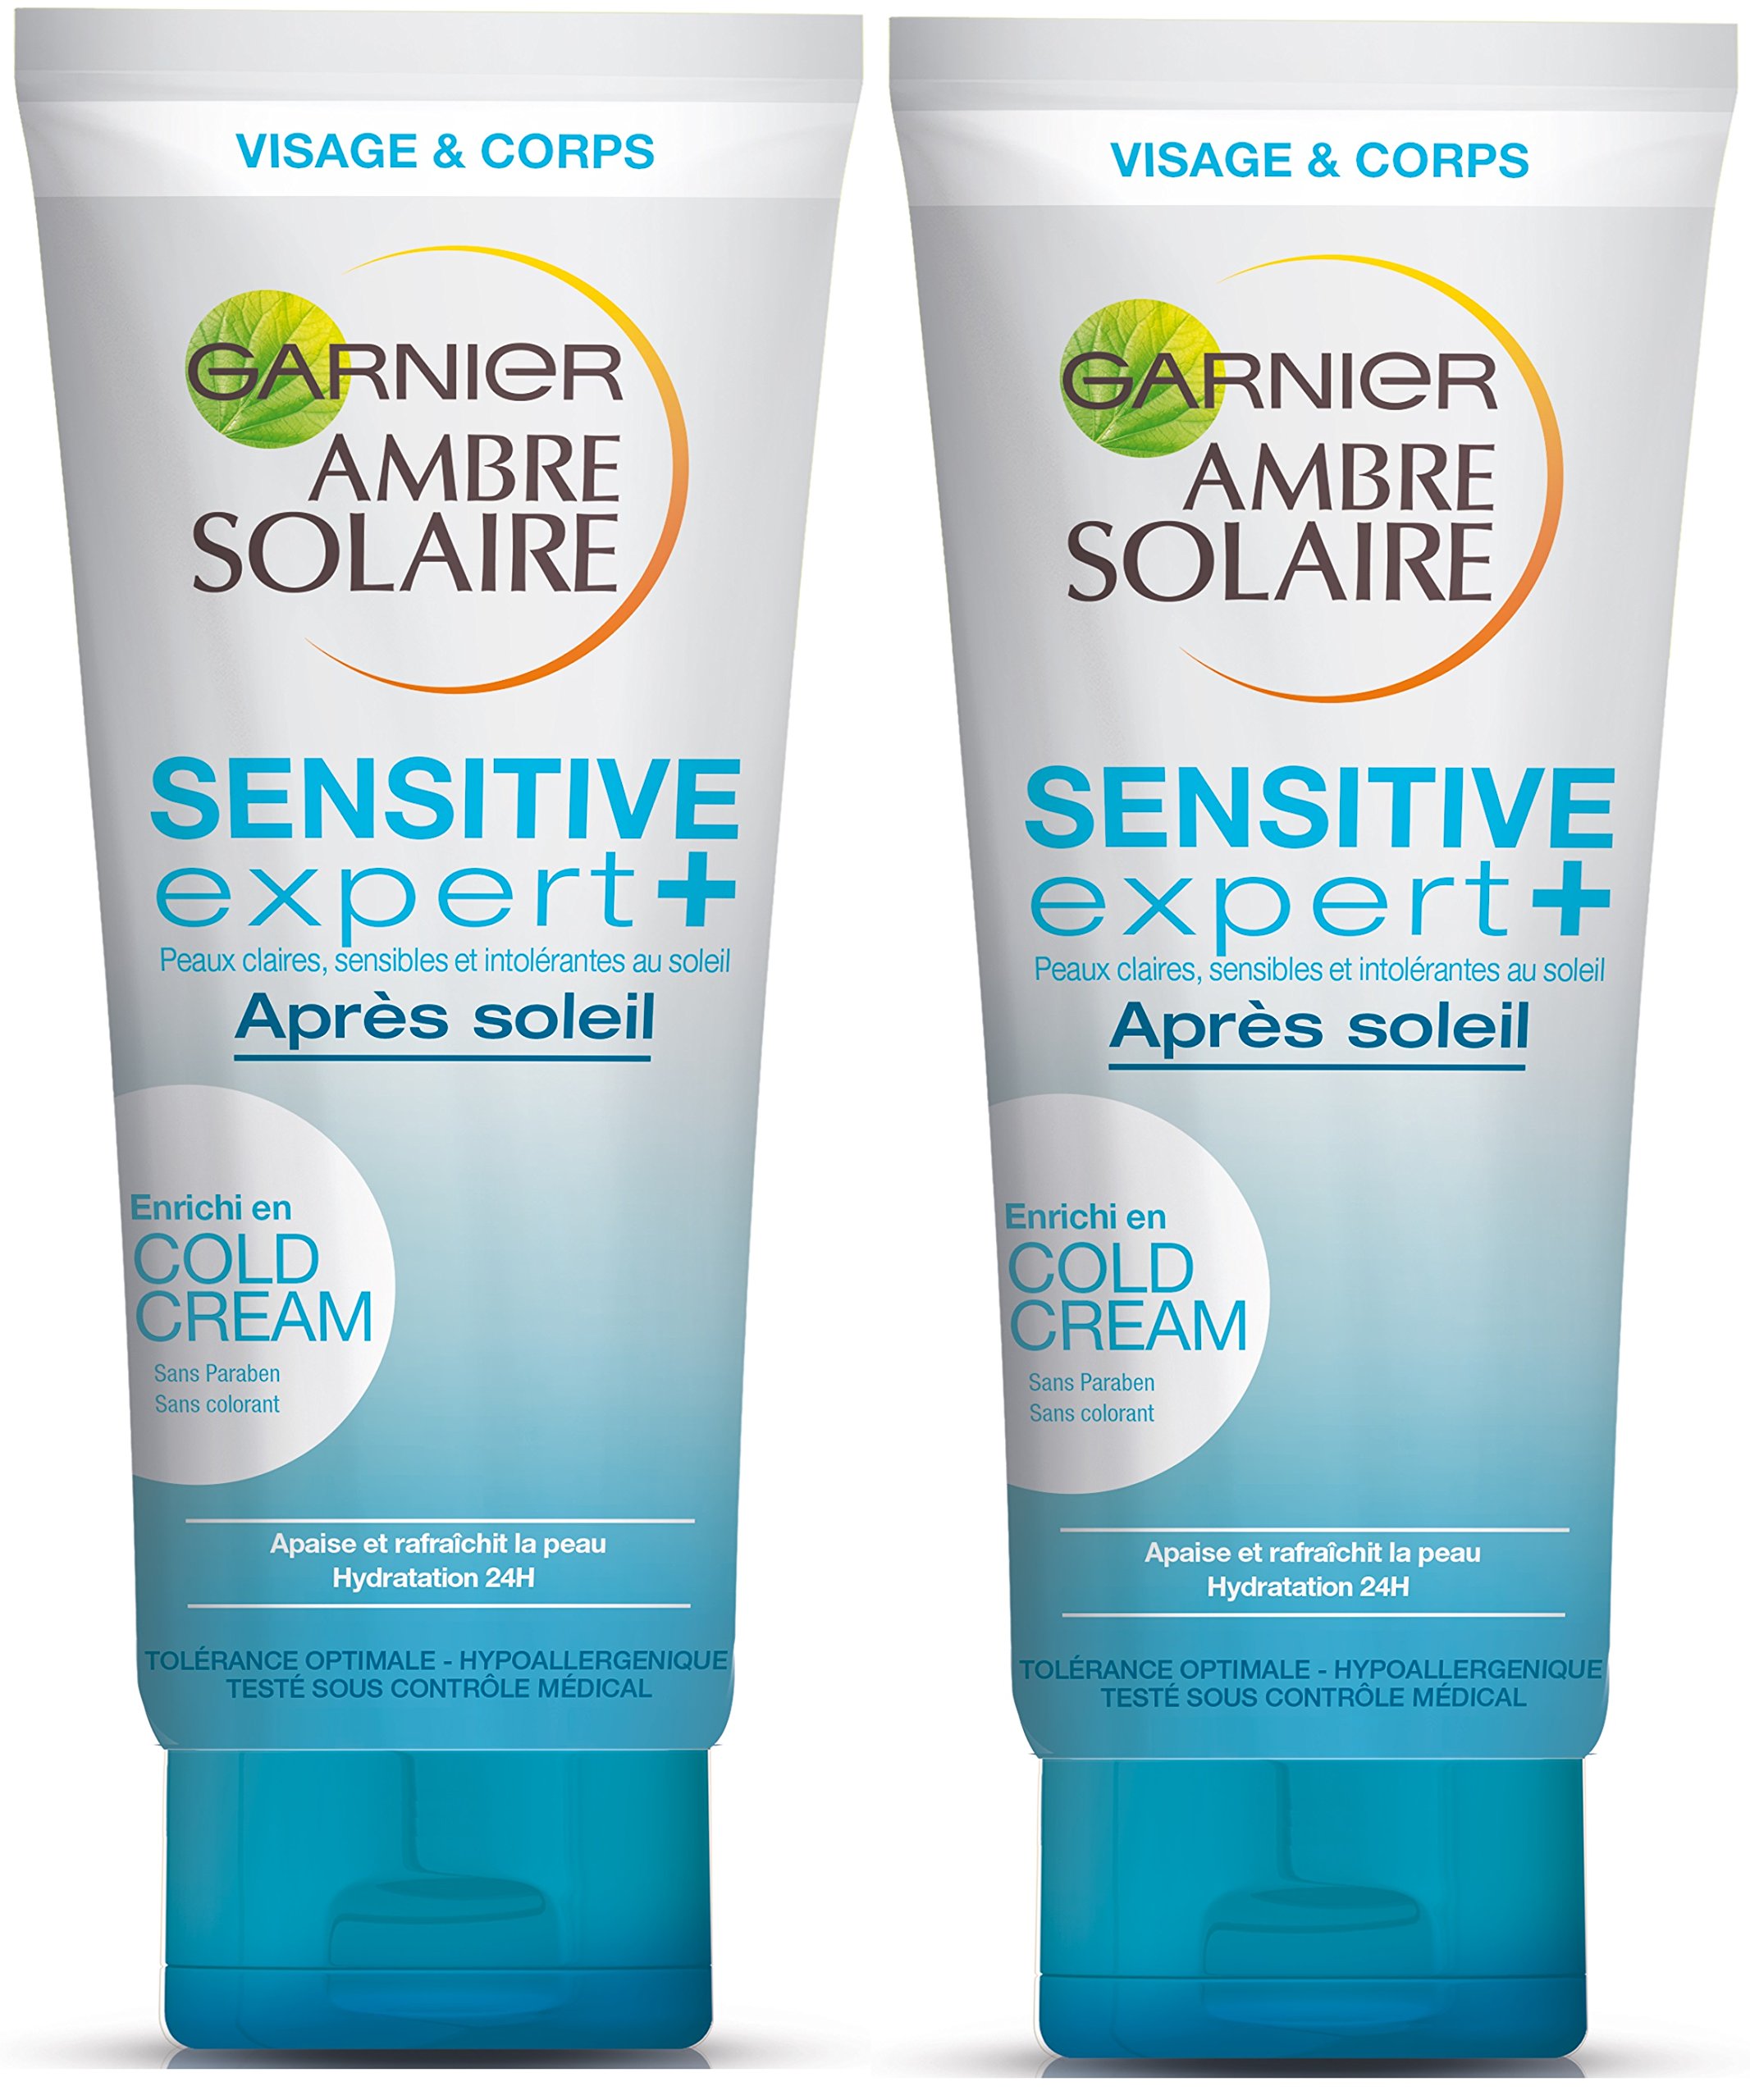 Garnier Ambre Solar Sensitive Expert+ After Soleil angereichert mit COLD CREAM 200 ml – 2 Stück